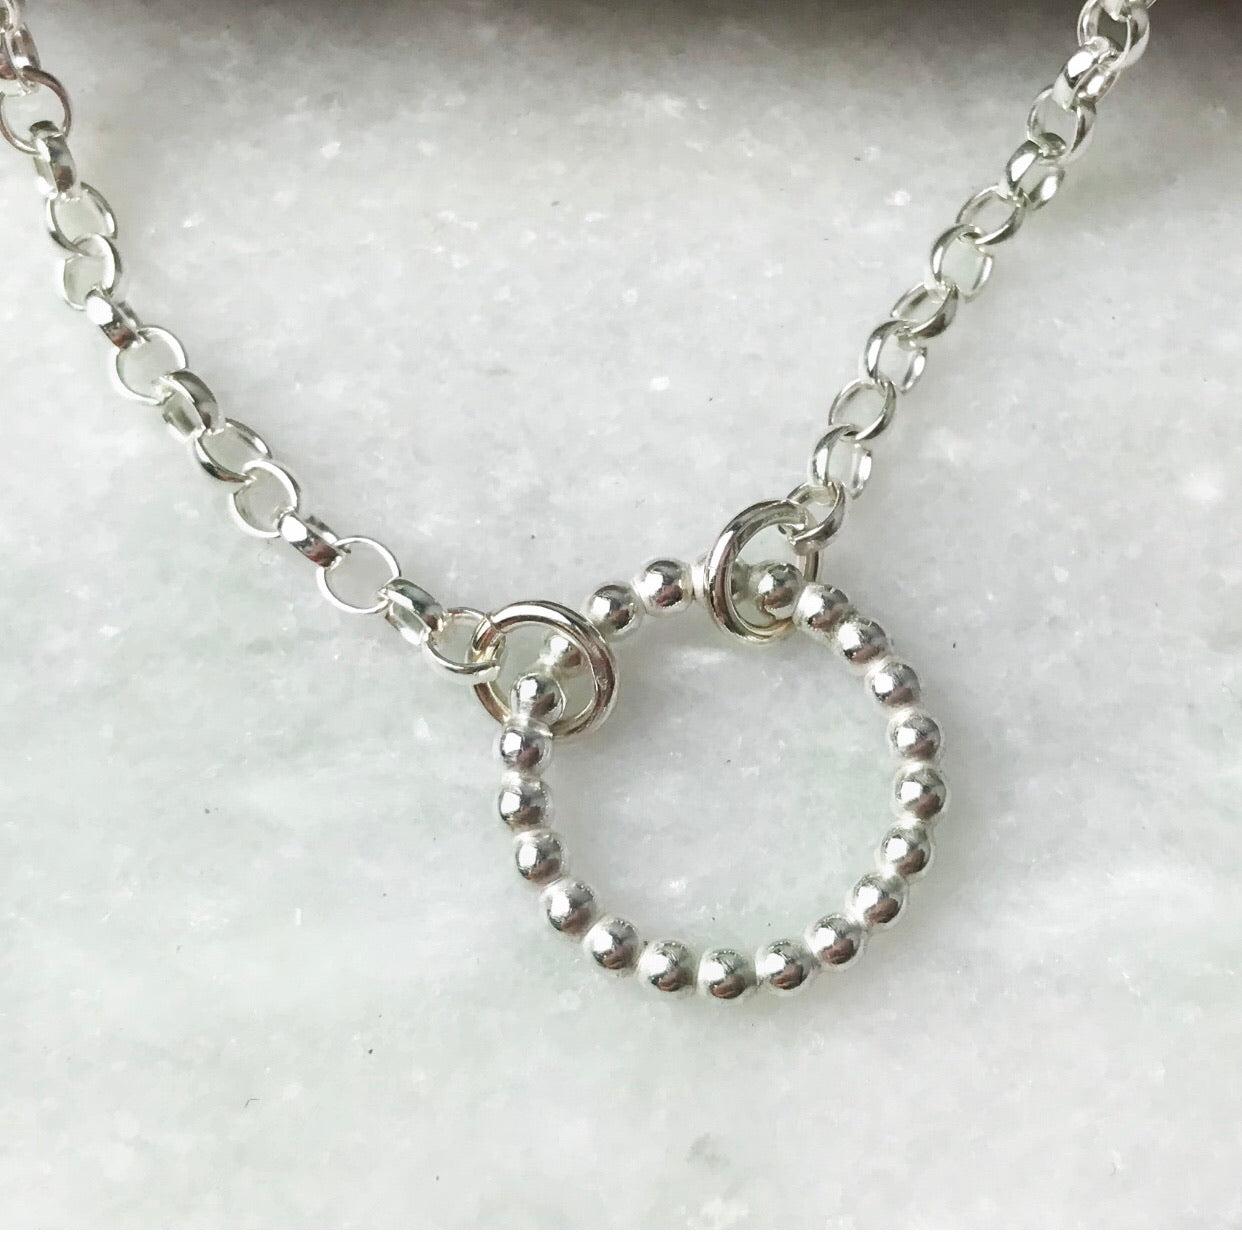 Beaded Halo Necklace - The Nancy Smillie Shop - Art, Jewellery & Designer Gifts Glasgow